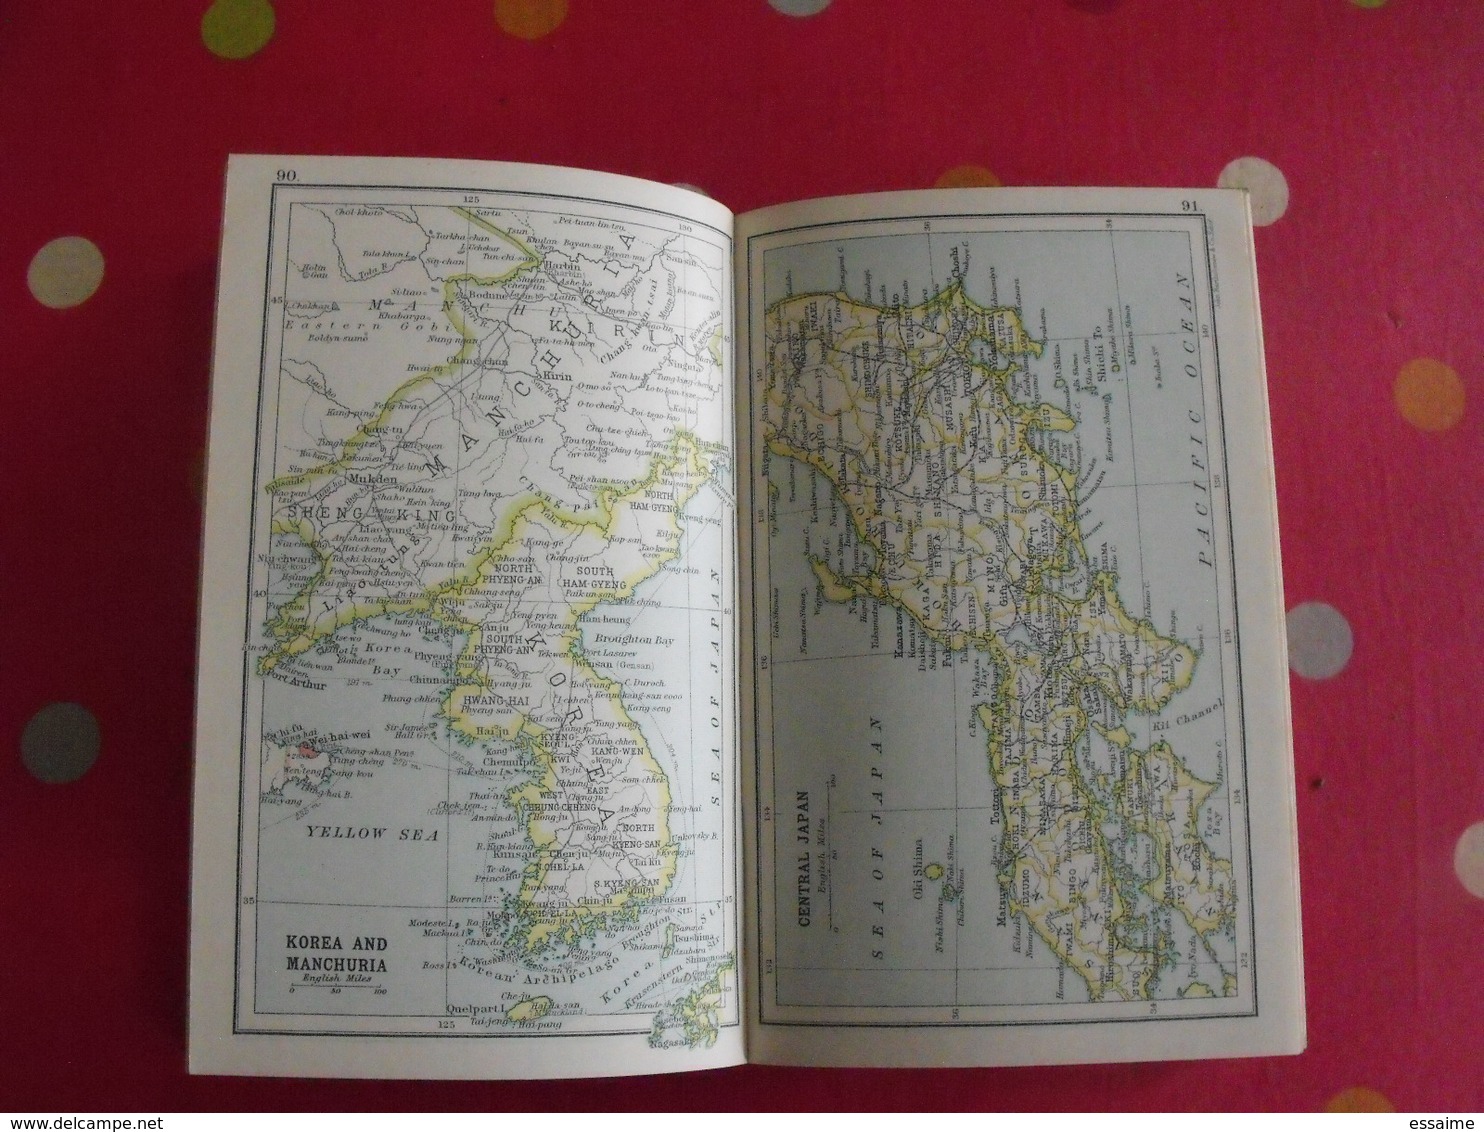 a literary & historical atlas of Asia. Bartholomew. Dent, London, 1912